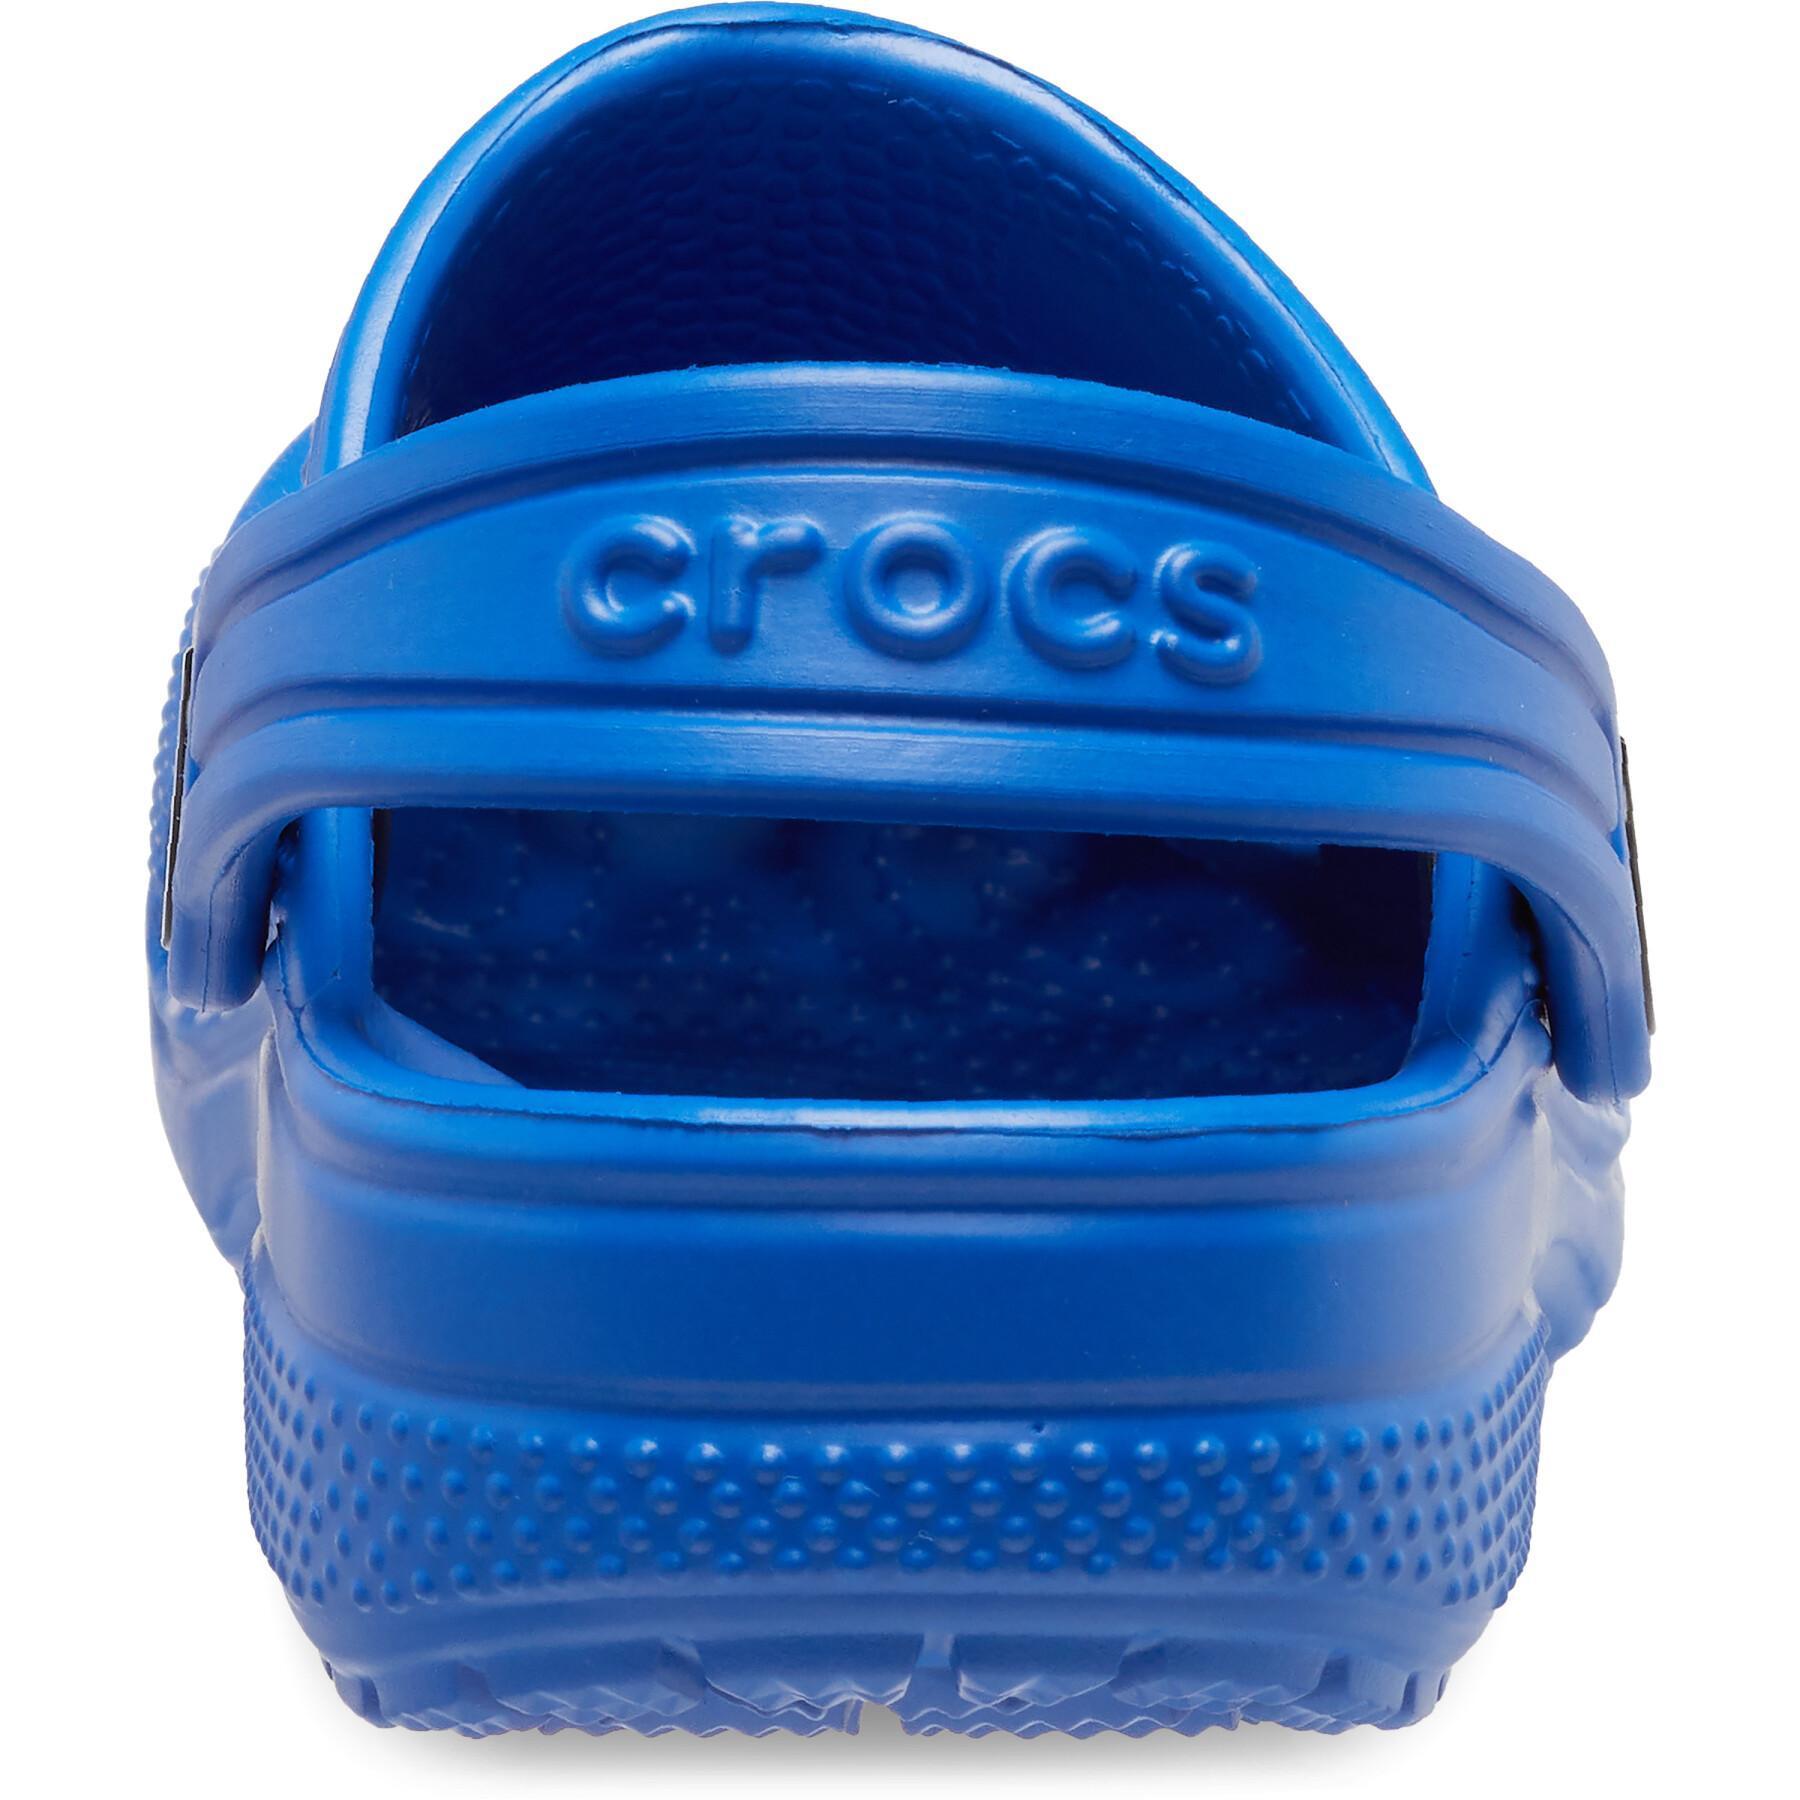 Babyklompen Crocs Classic